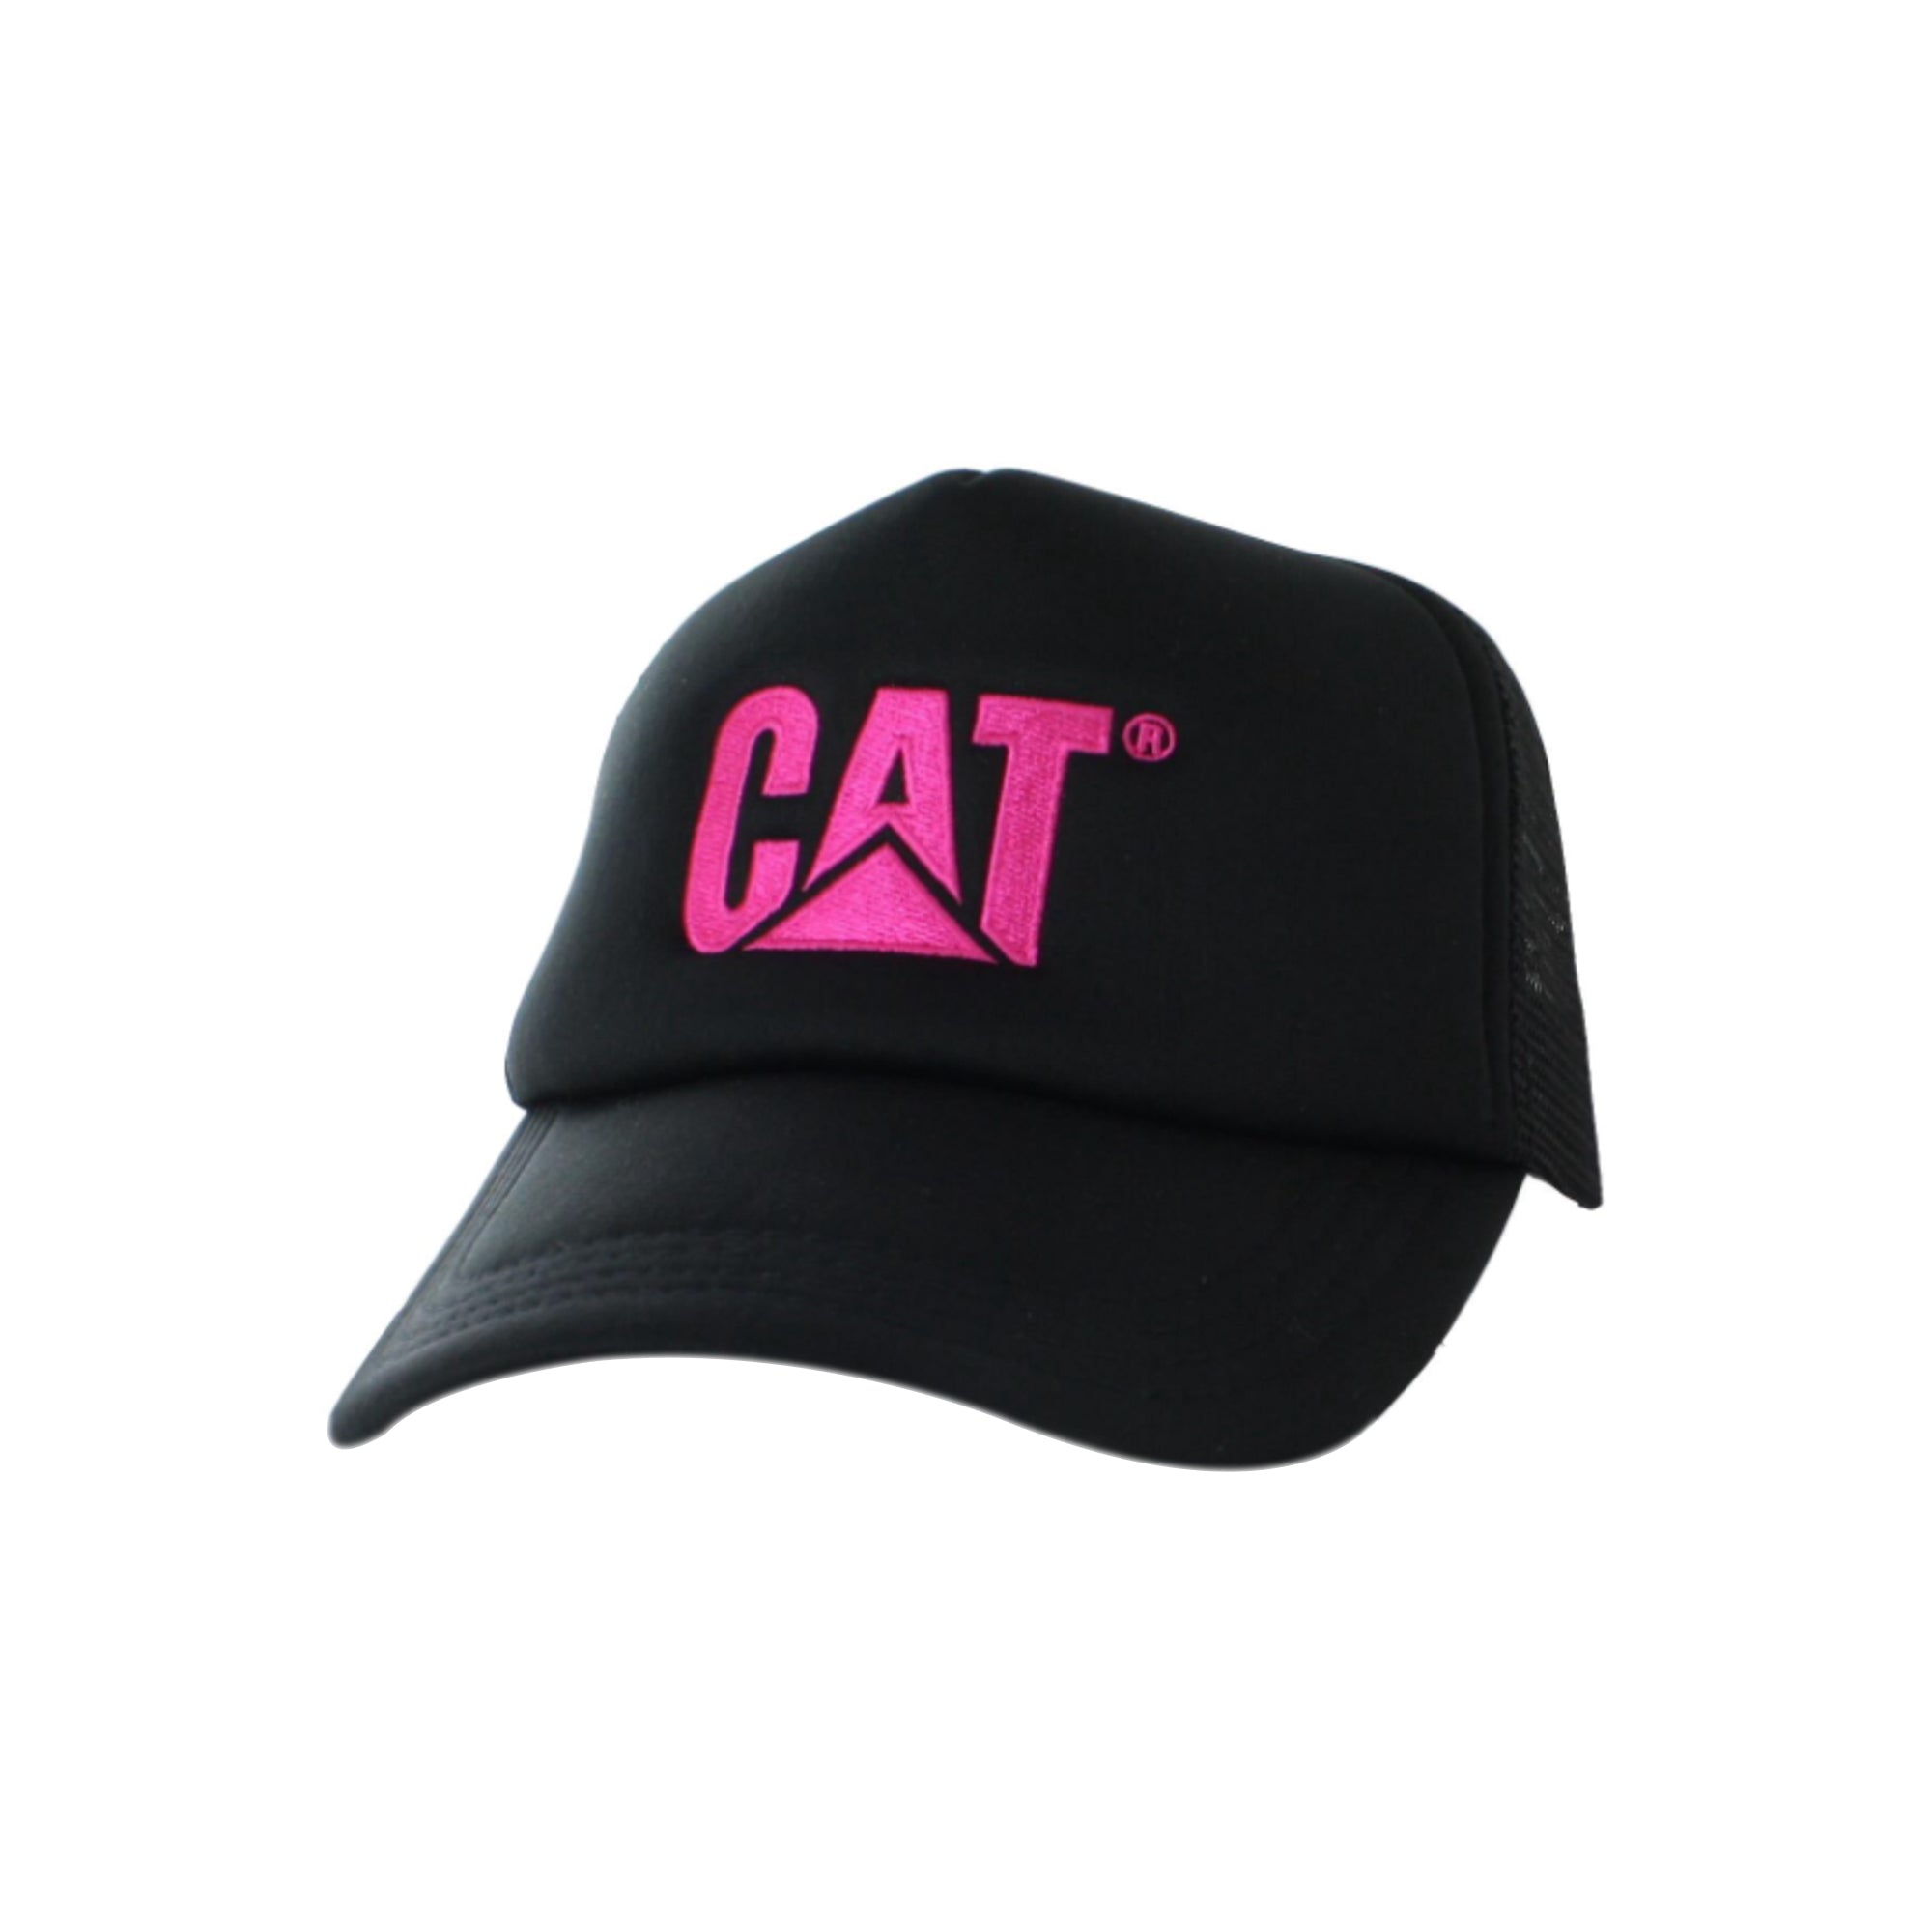 CAT Black/Pink Trucker Cap